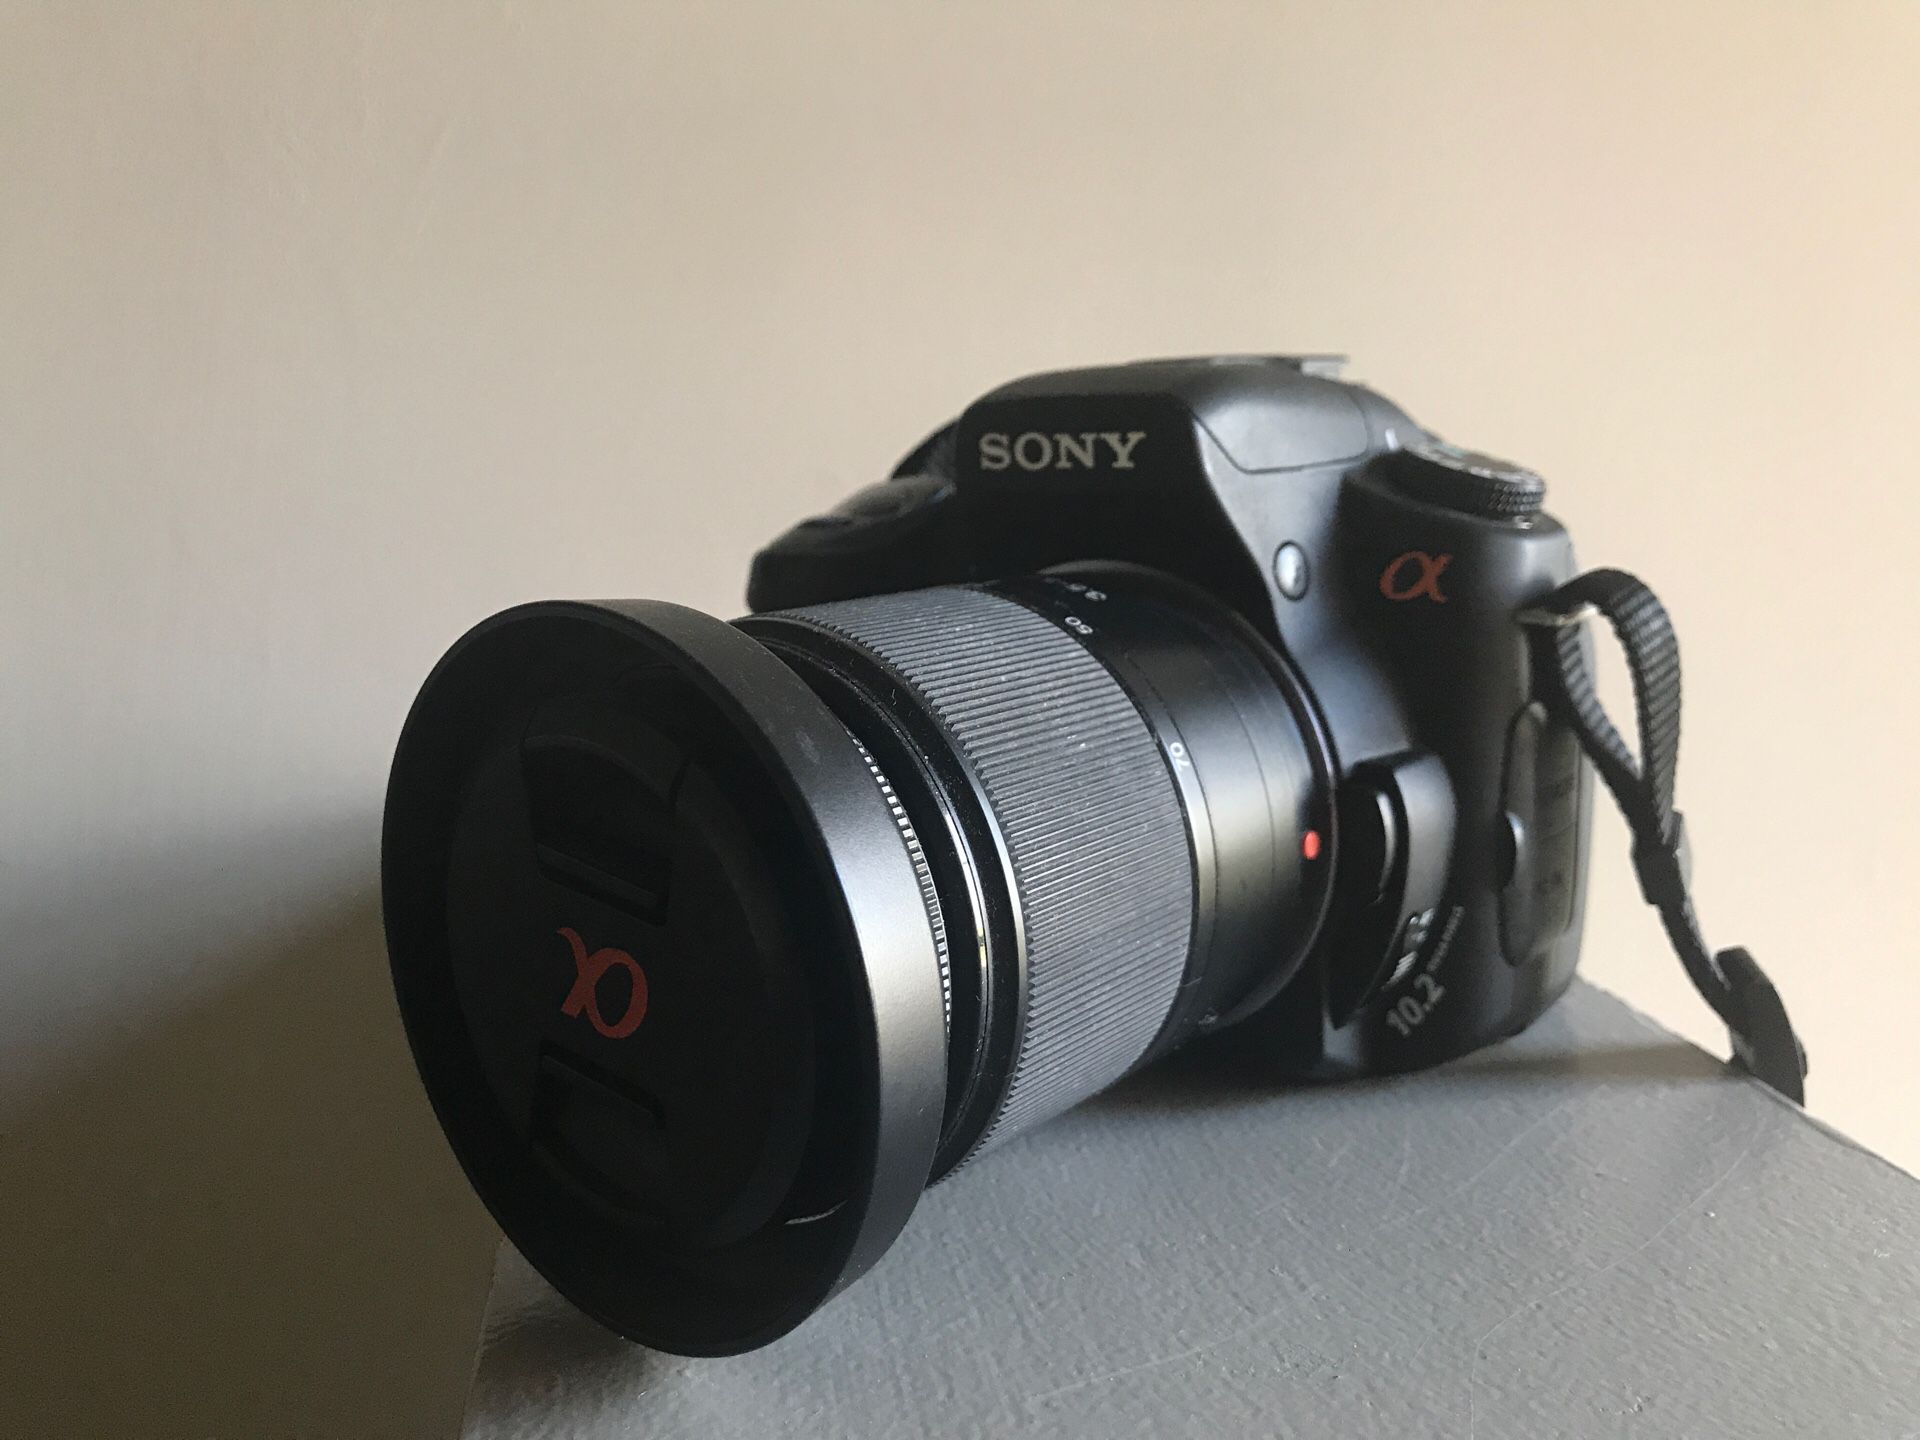 Sony Alpha 300 DLSR Camera